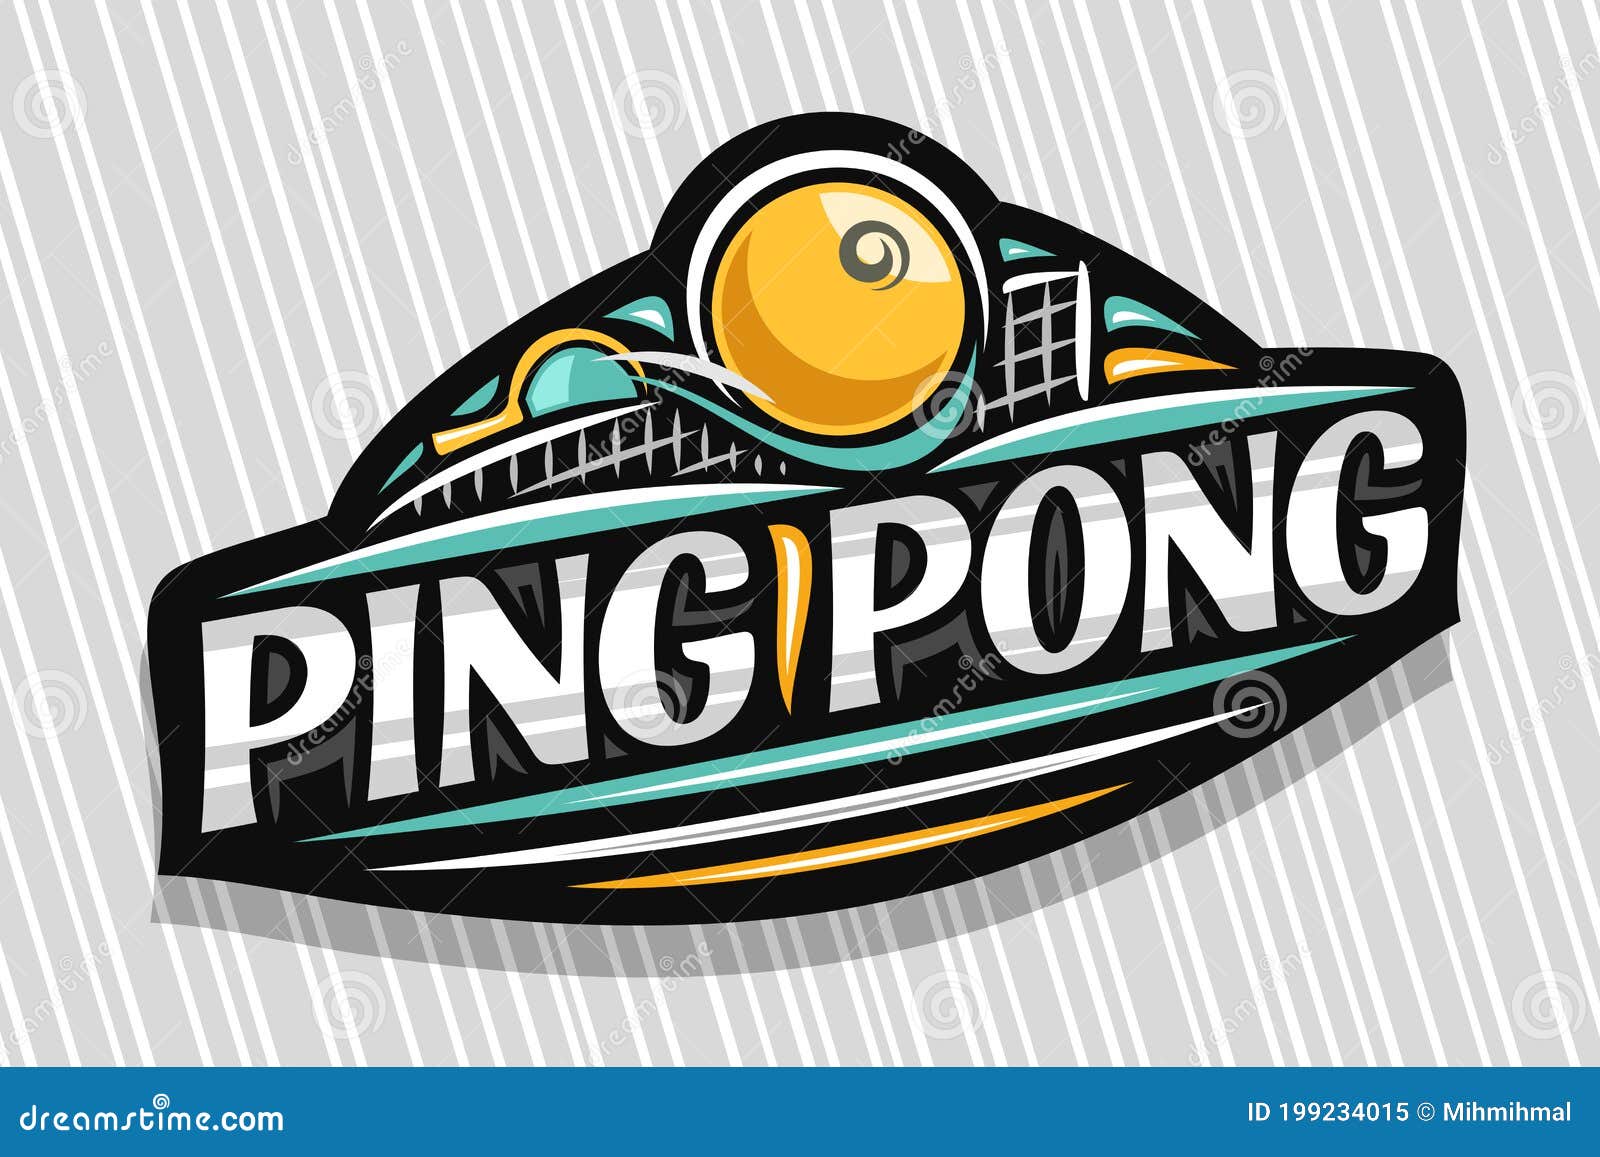  logo for ping pong